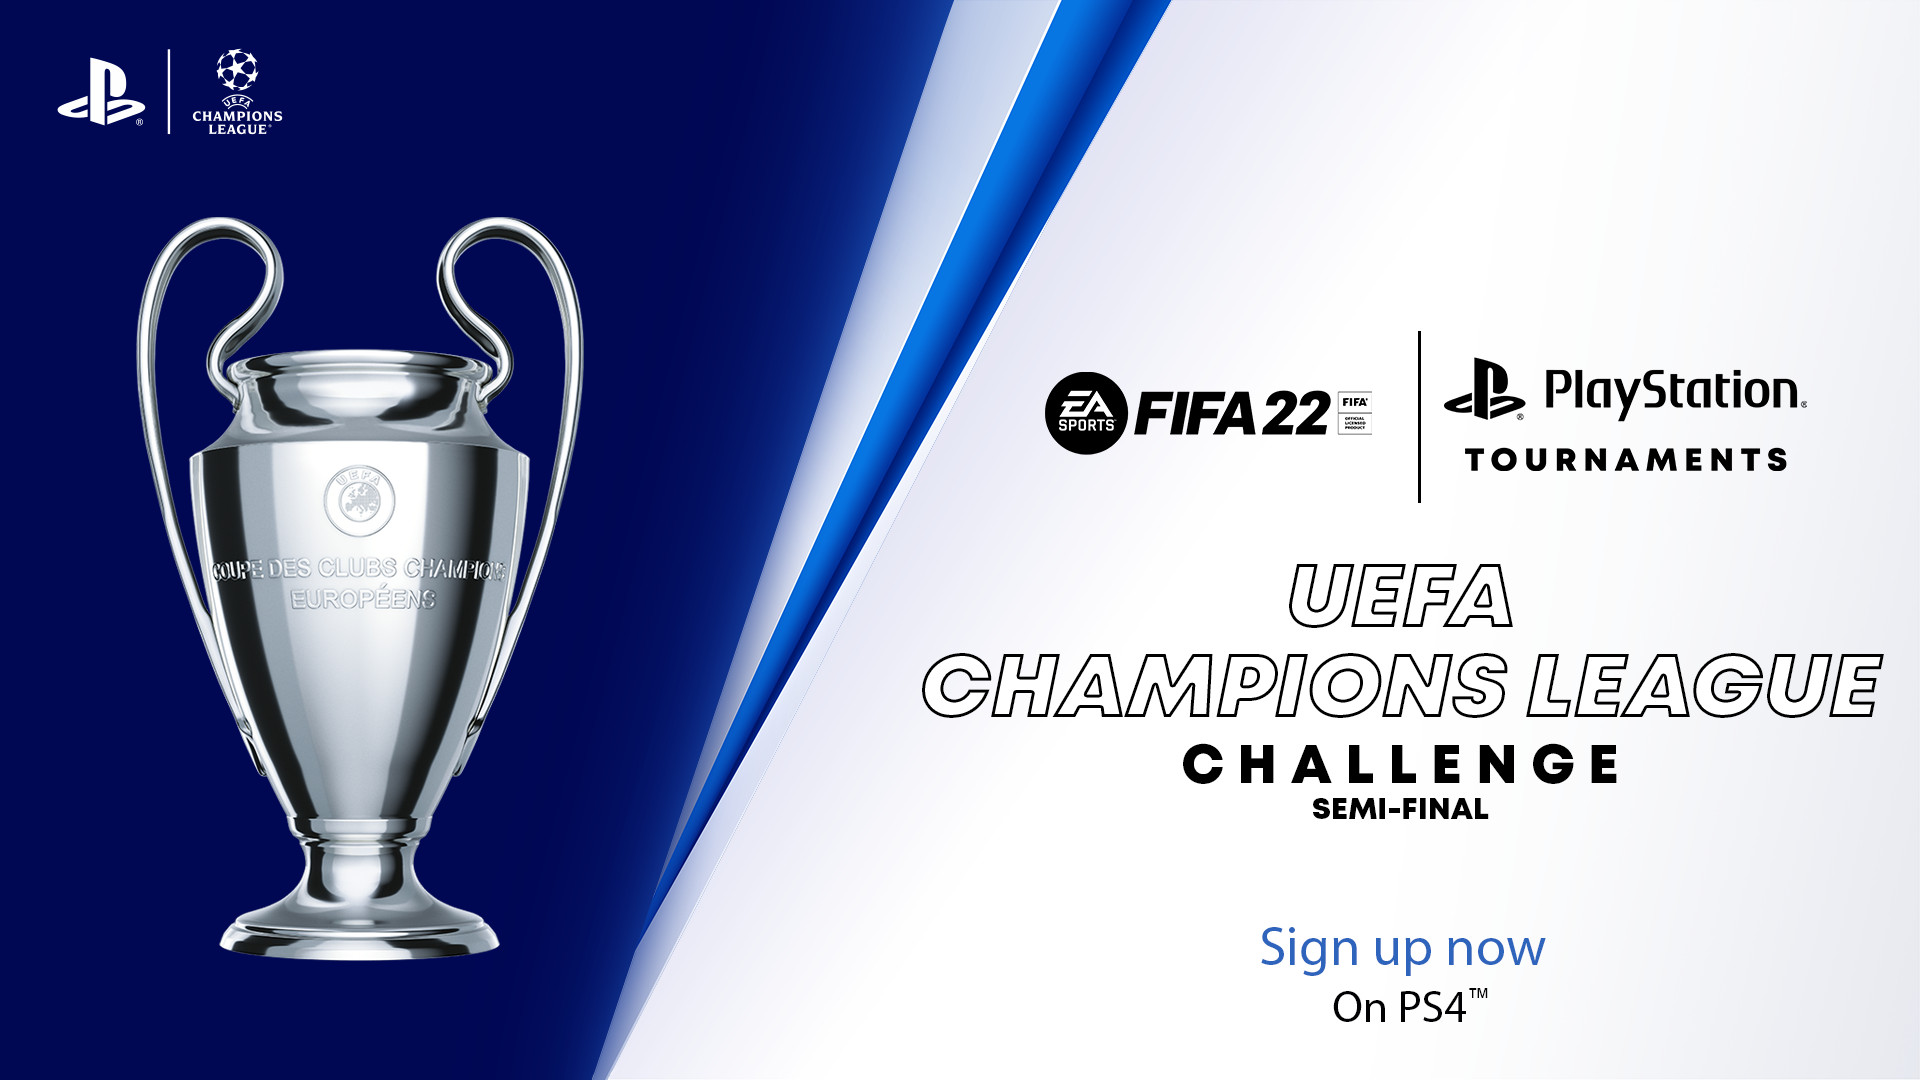 FIFA 22 PlayStation Tournaments UEFA Champions League Challenge